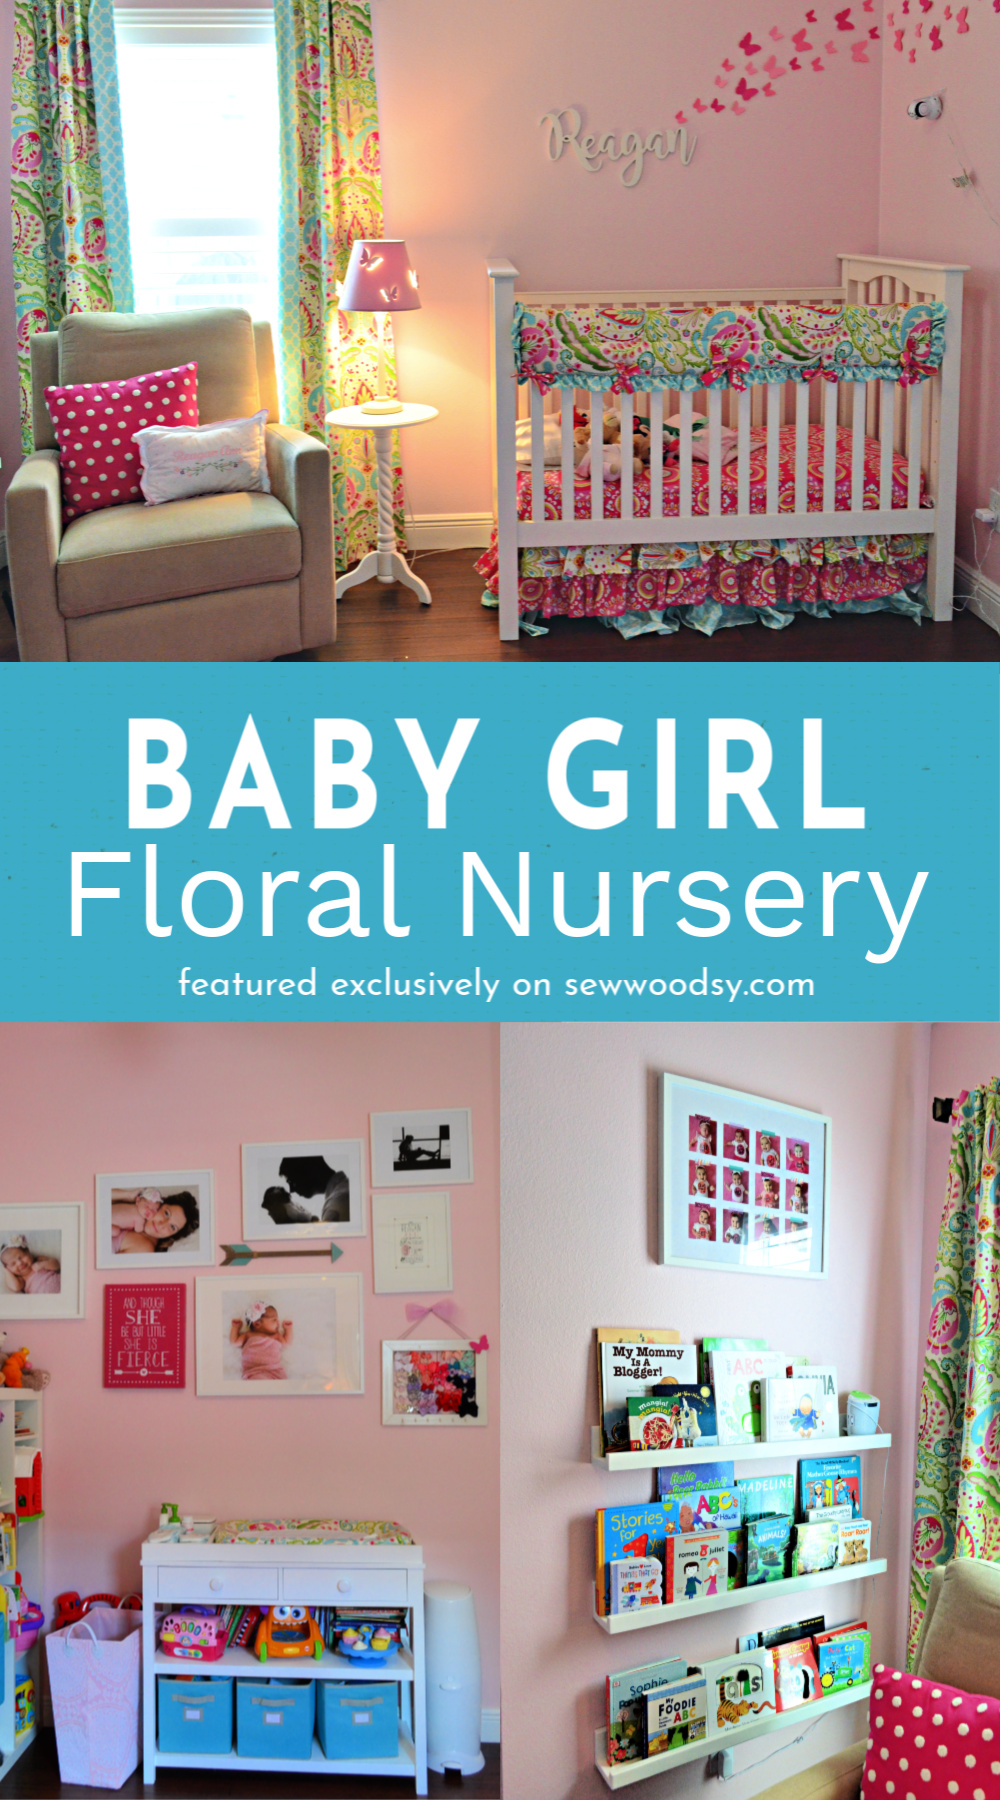 Baby Girl Floral Nursery